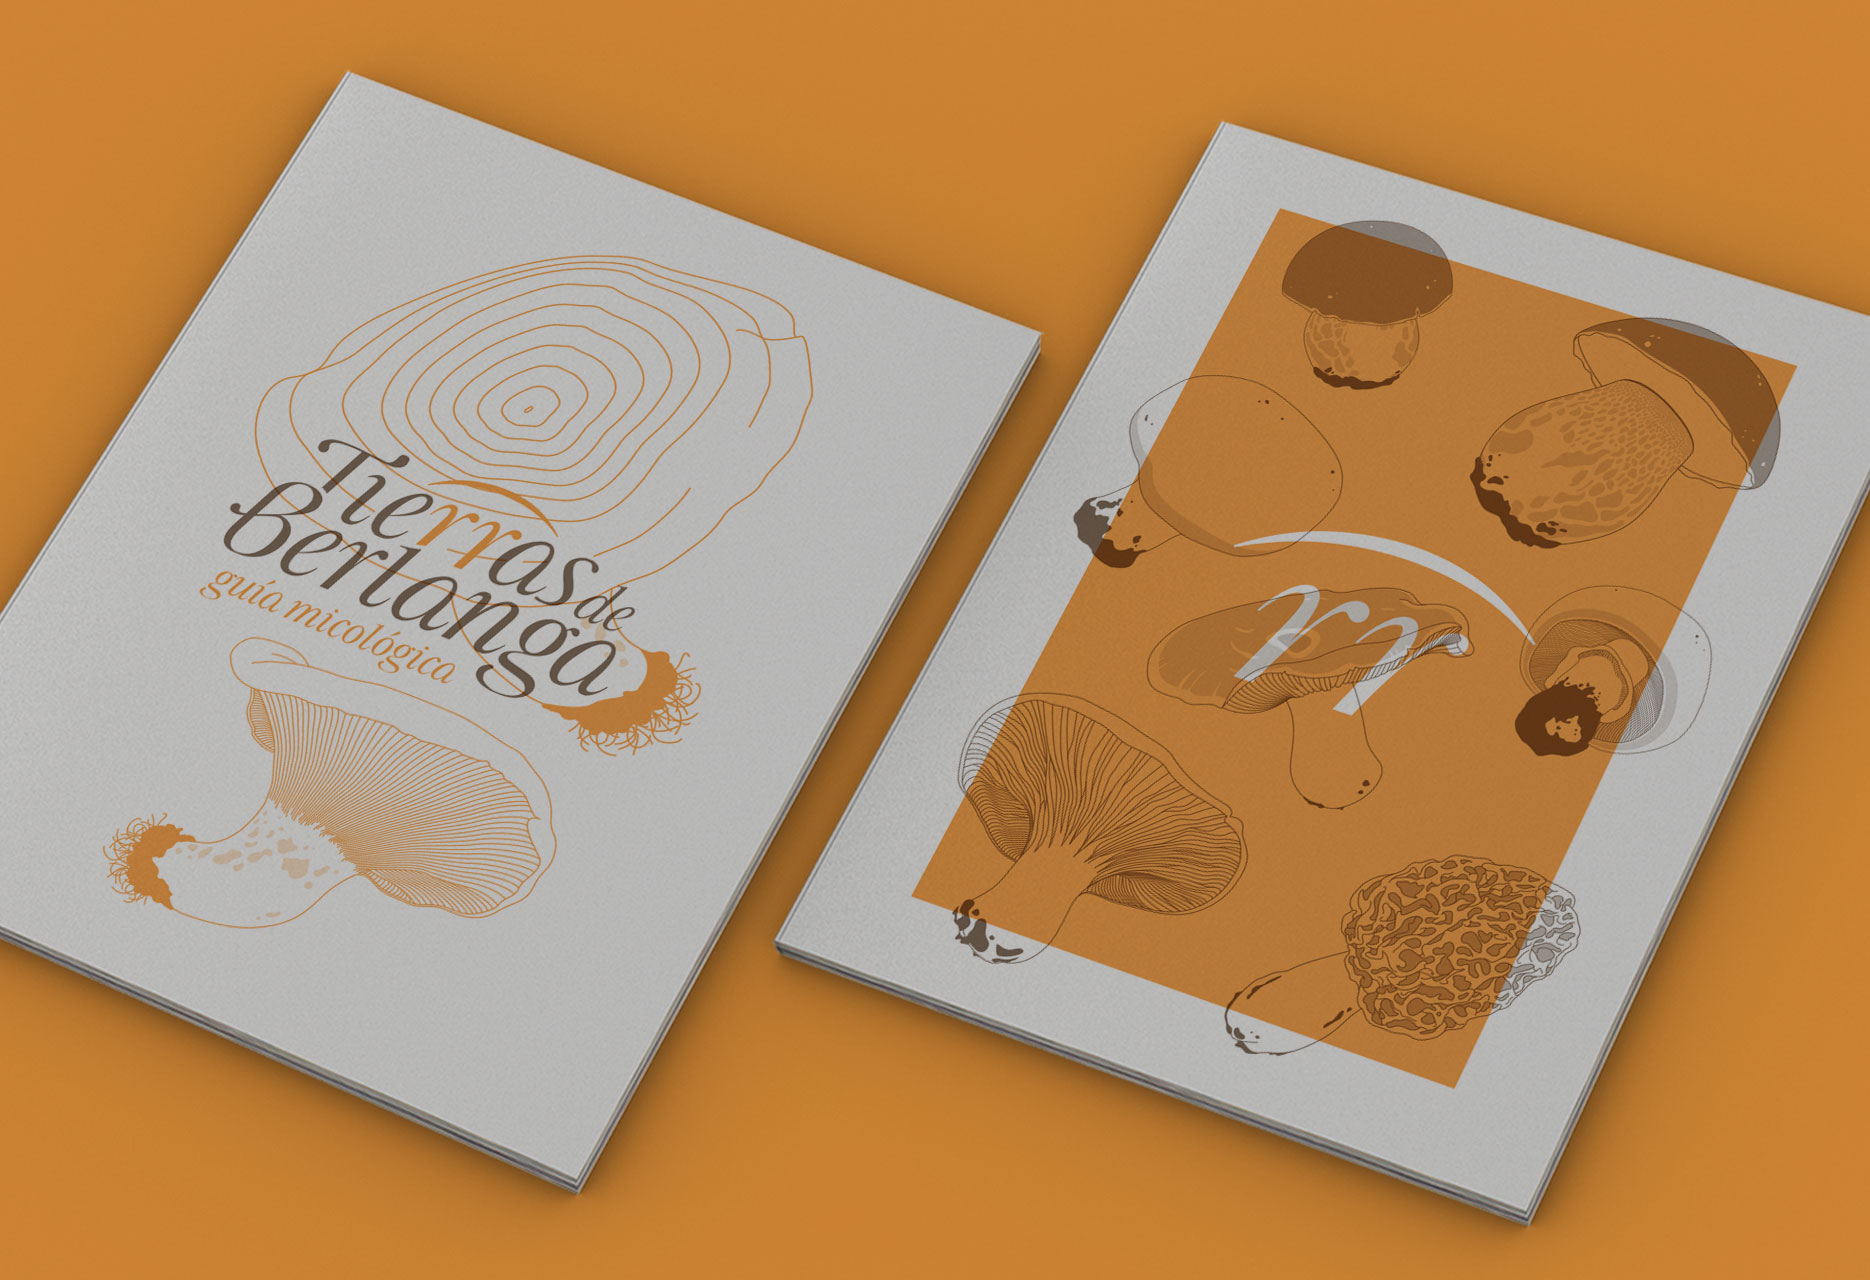 Brand design and mycological guide Tierras de Berlanga - publishing design / branding / illustration